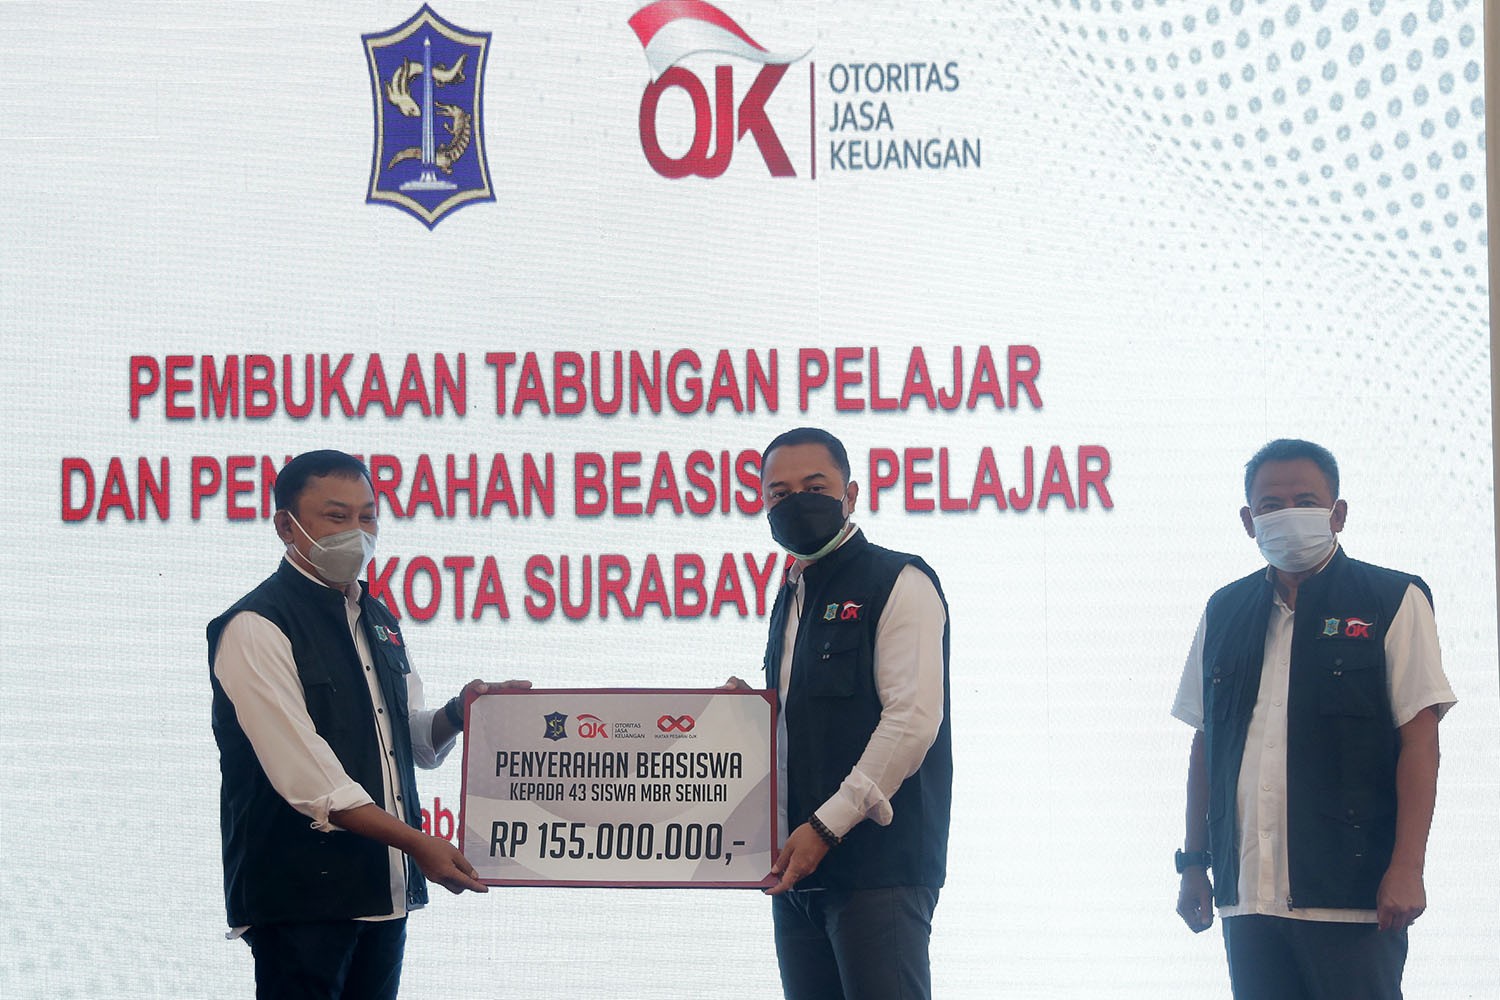 Kepala OJK Kanreg IV Jatim, Bambang Mukti Riyadi (kiri) menyerahkan beasiswa kepada Walikota Surabaya, Eri Cahyadi, di SMP Unesa 1, Surabaya, Jumat 20 Agustus 2021. (Foto: Istimewa)